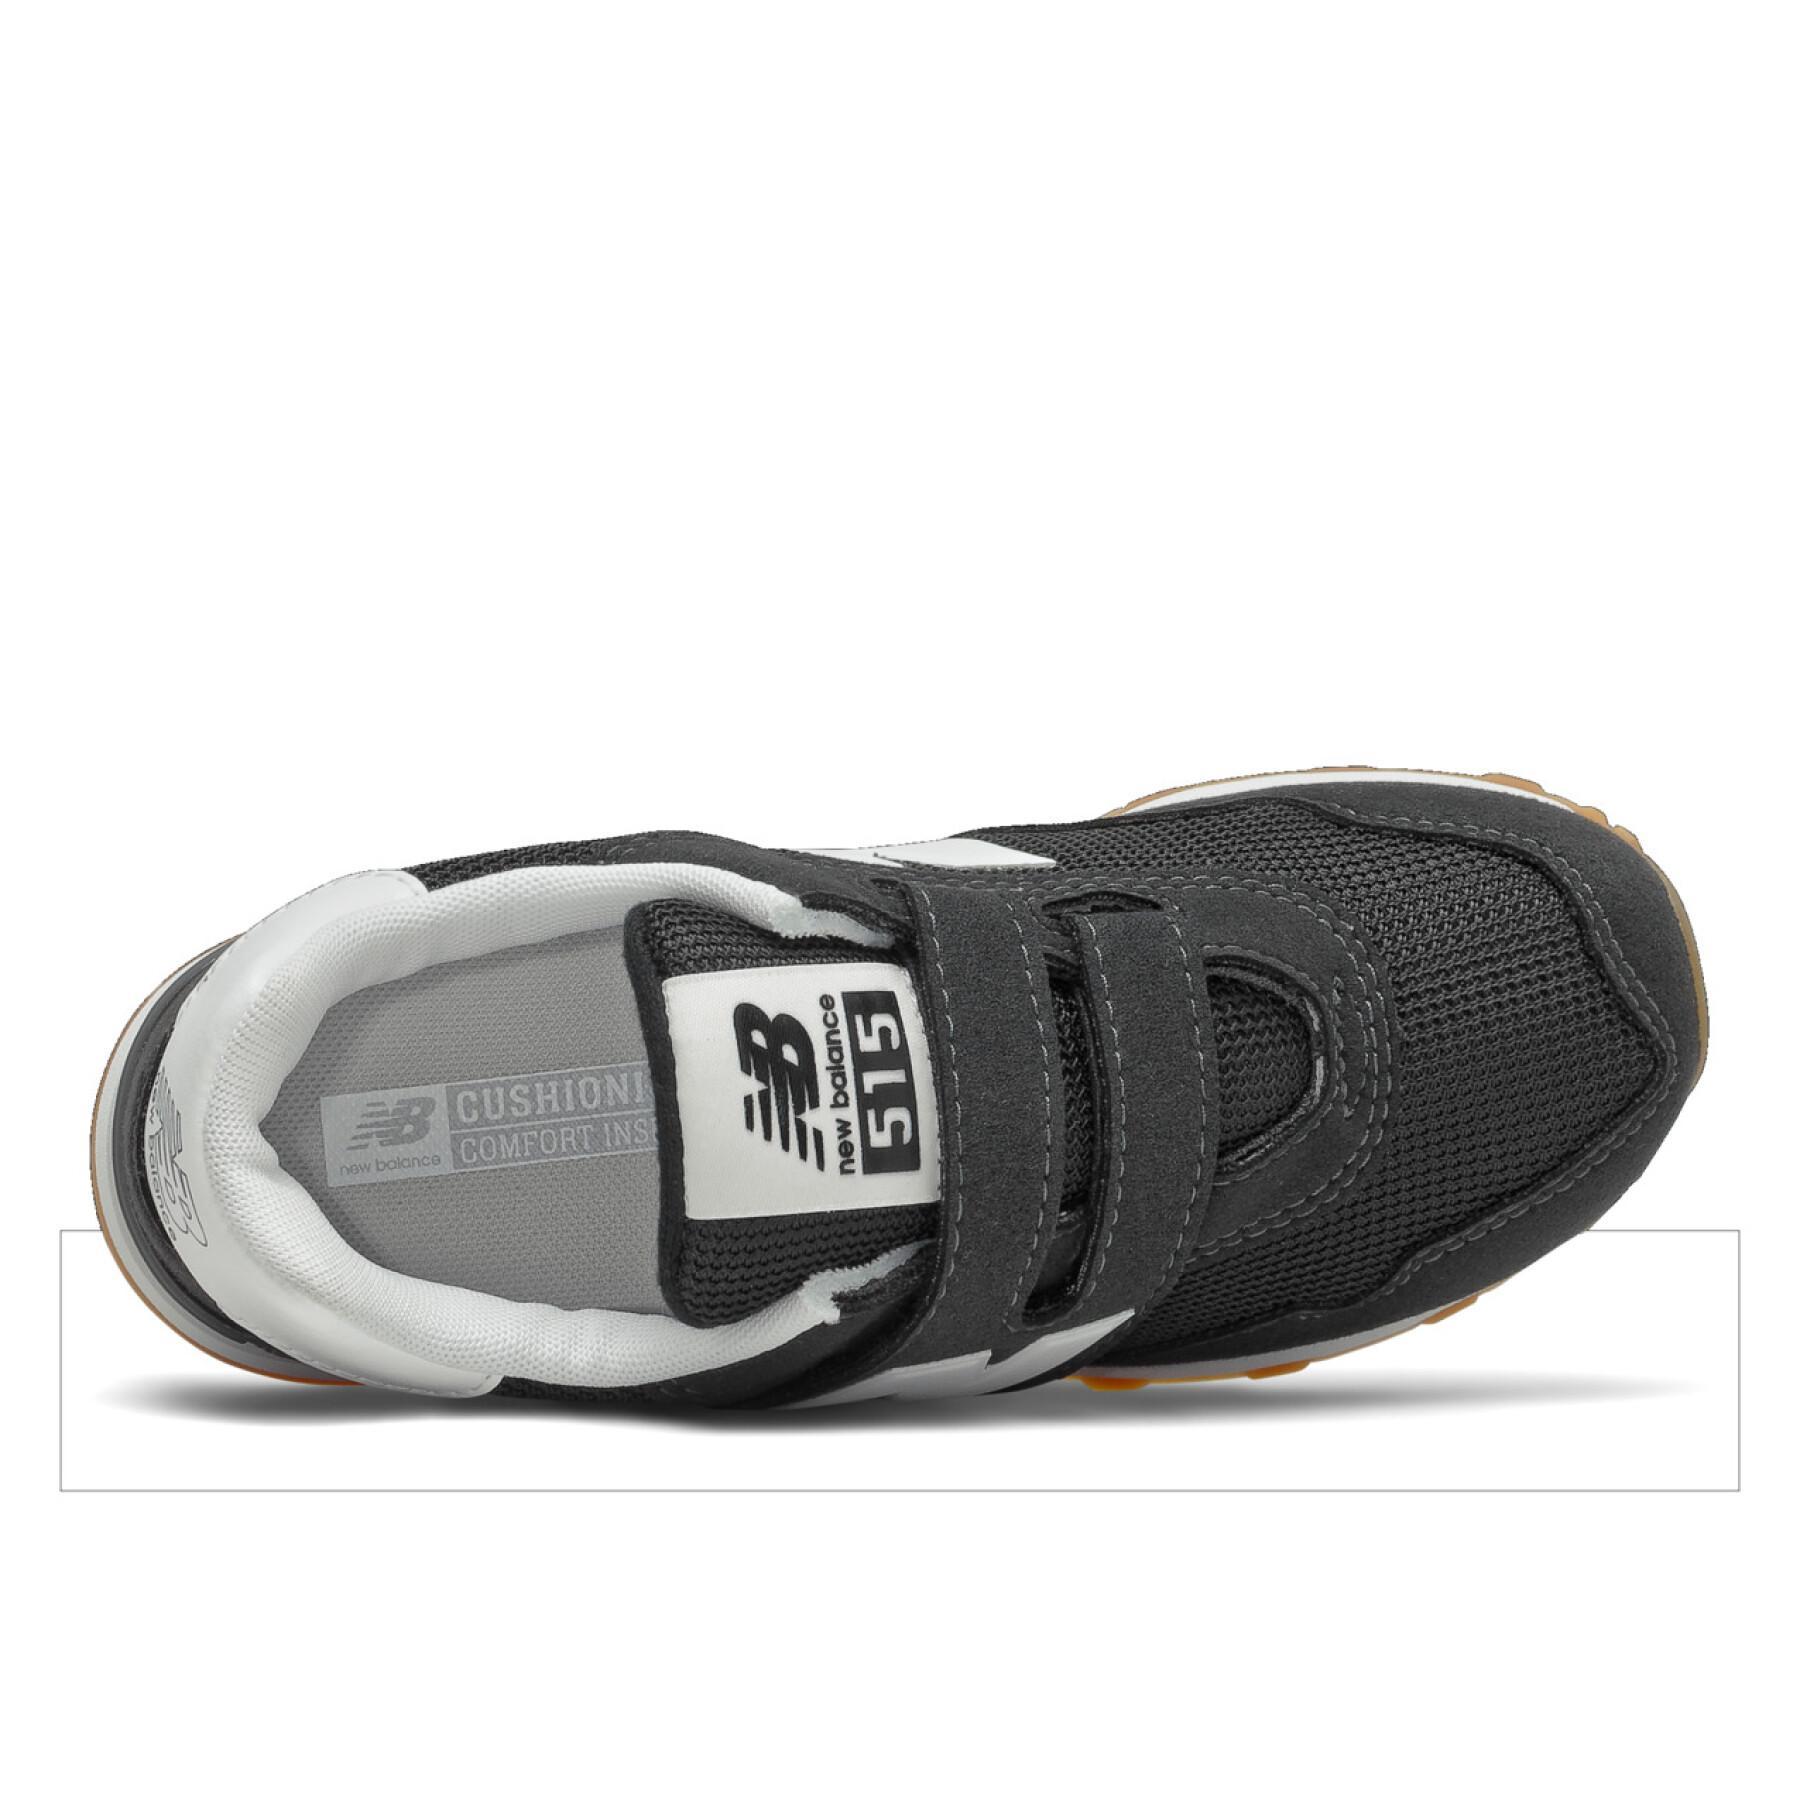 Children's shoes New Balance 515 classic